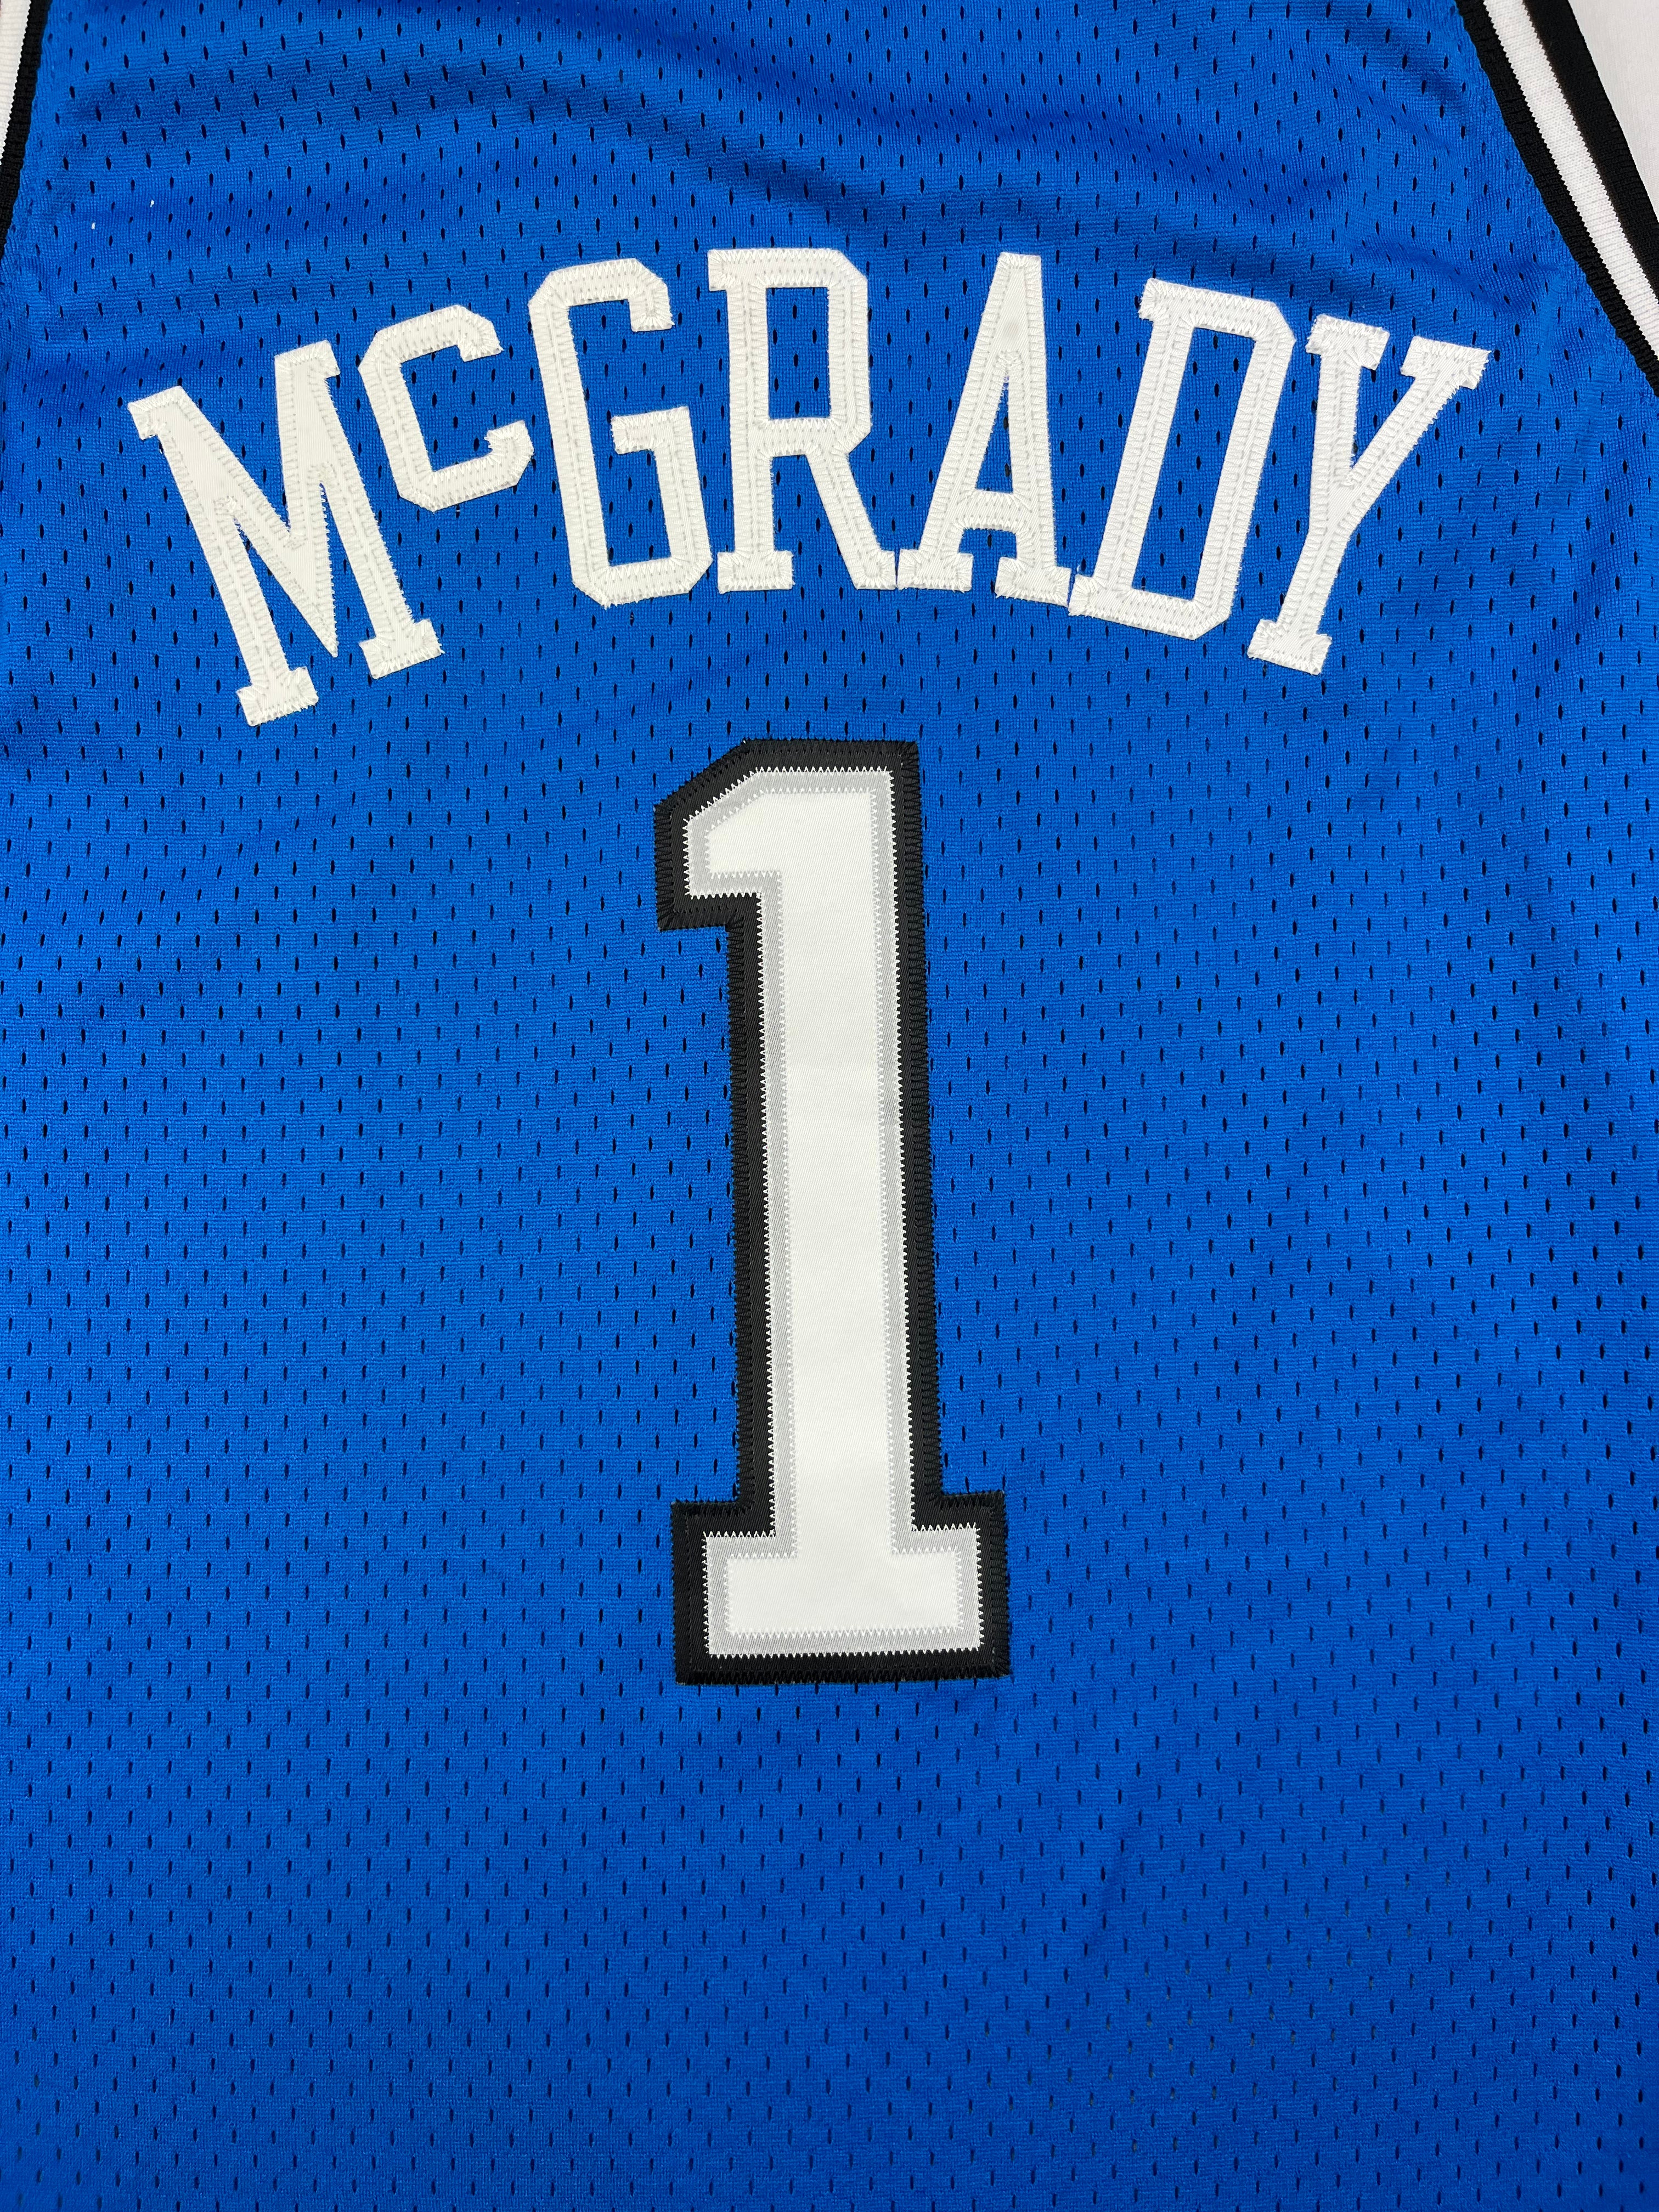 2003-04 Orlando Magic Nike Swingman Road Jersey McGrady # 1 (XXL) 9/10